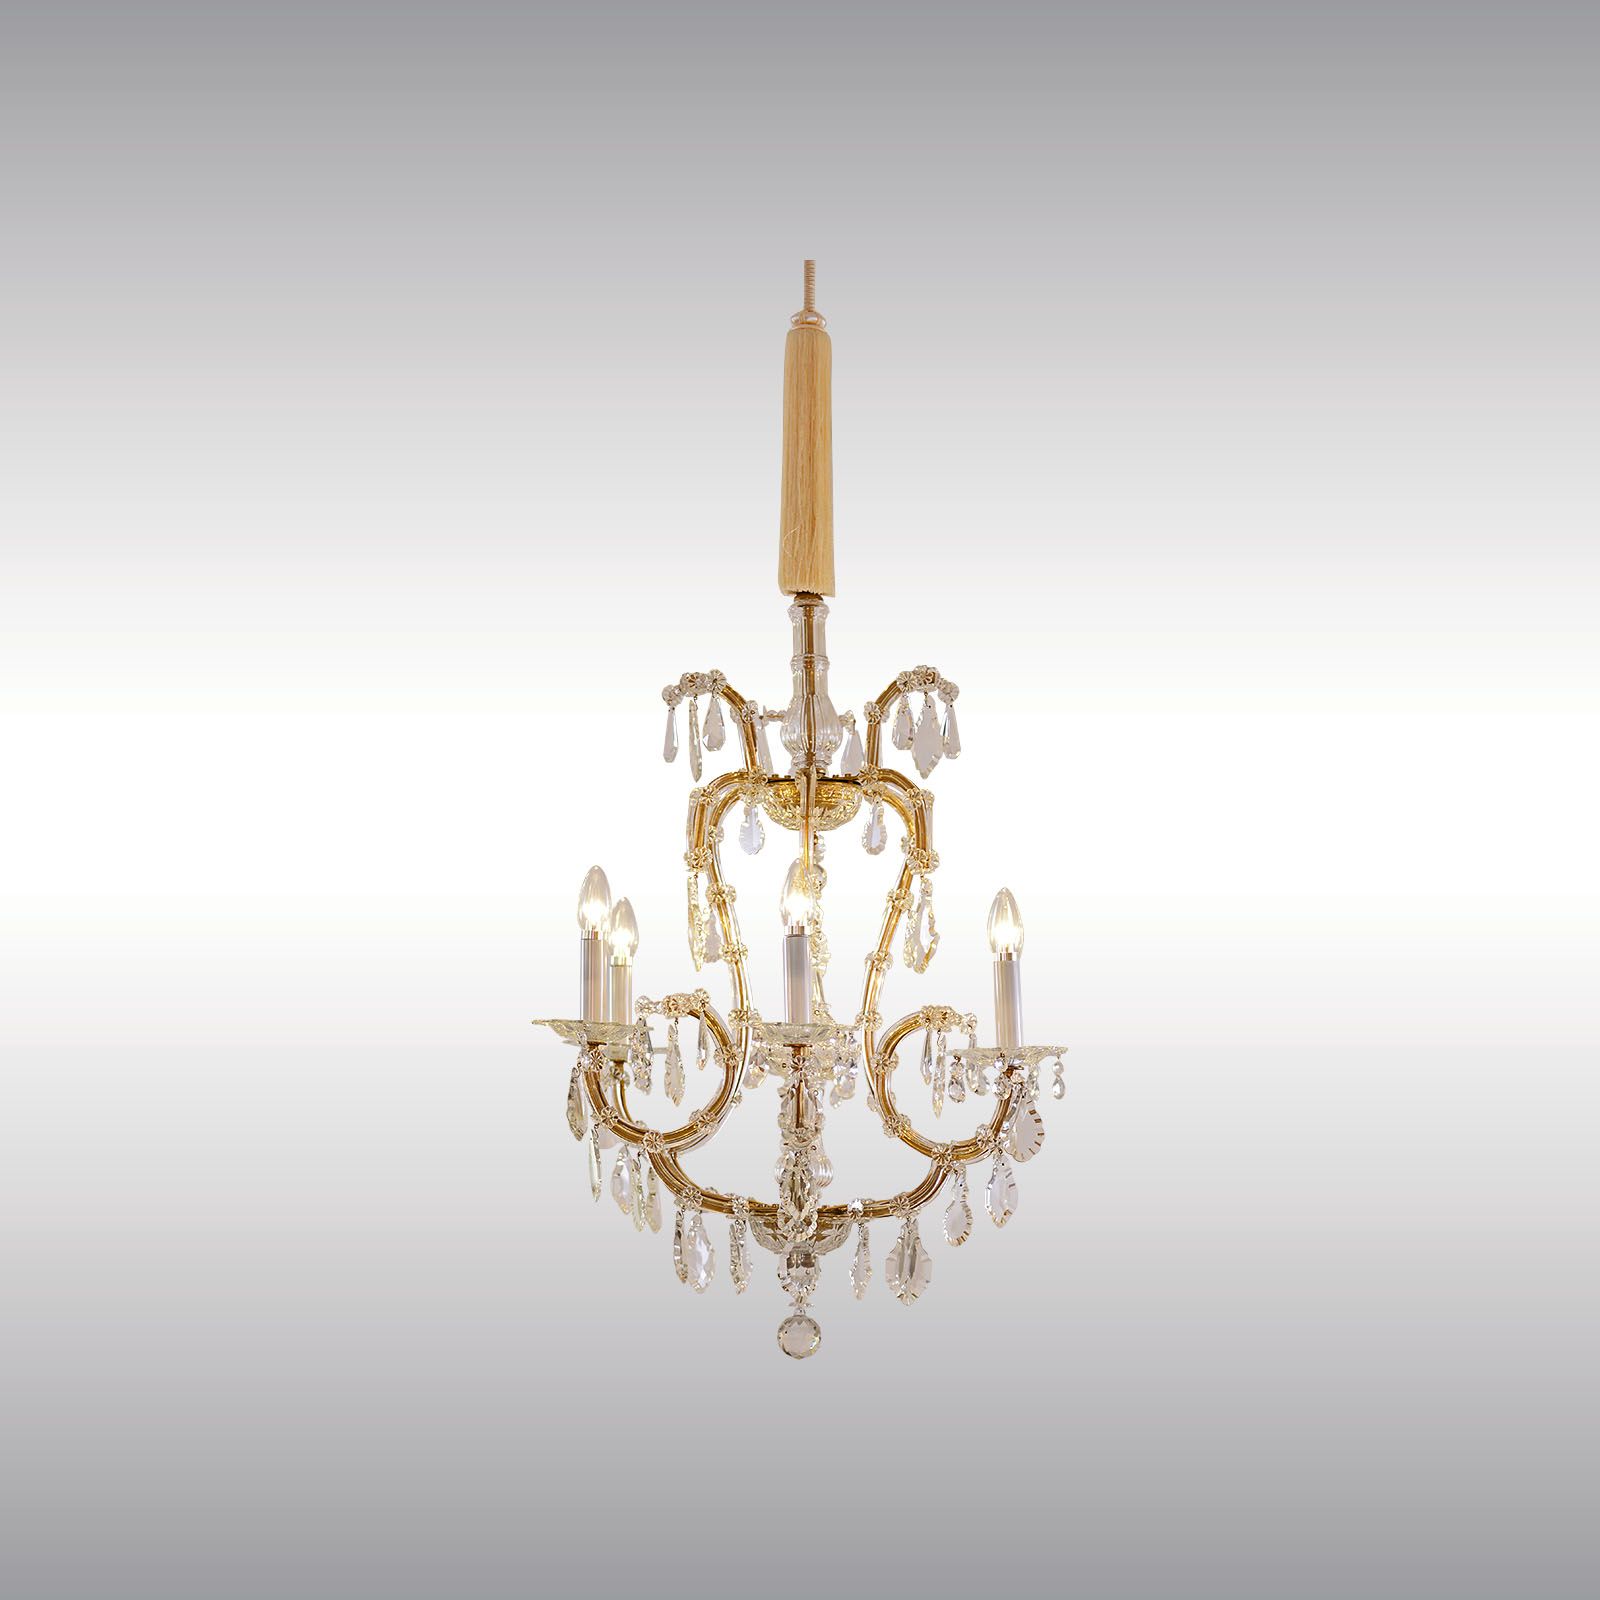 WOKA LAMPS VIENNA - OrderNr.: 44058|Maria Theresia Chandelier - Design: Maria Theresien Stil